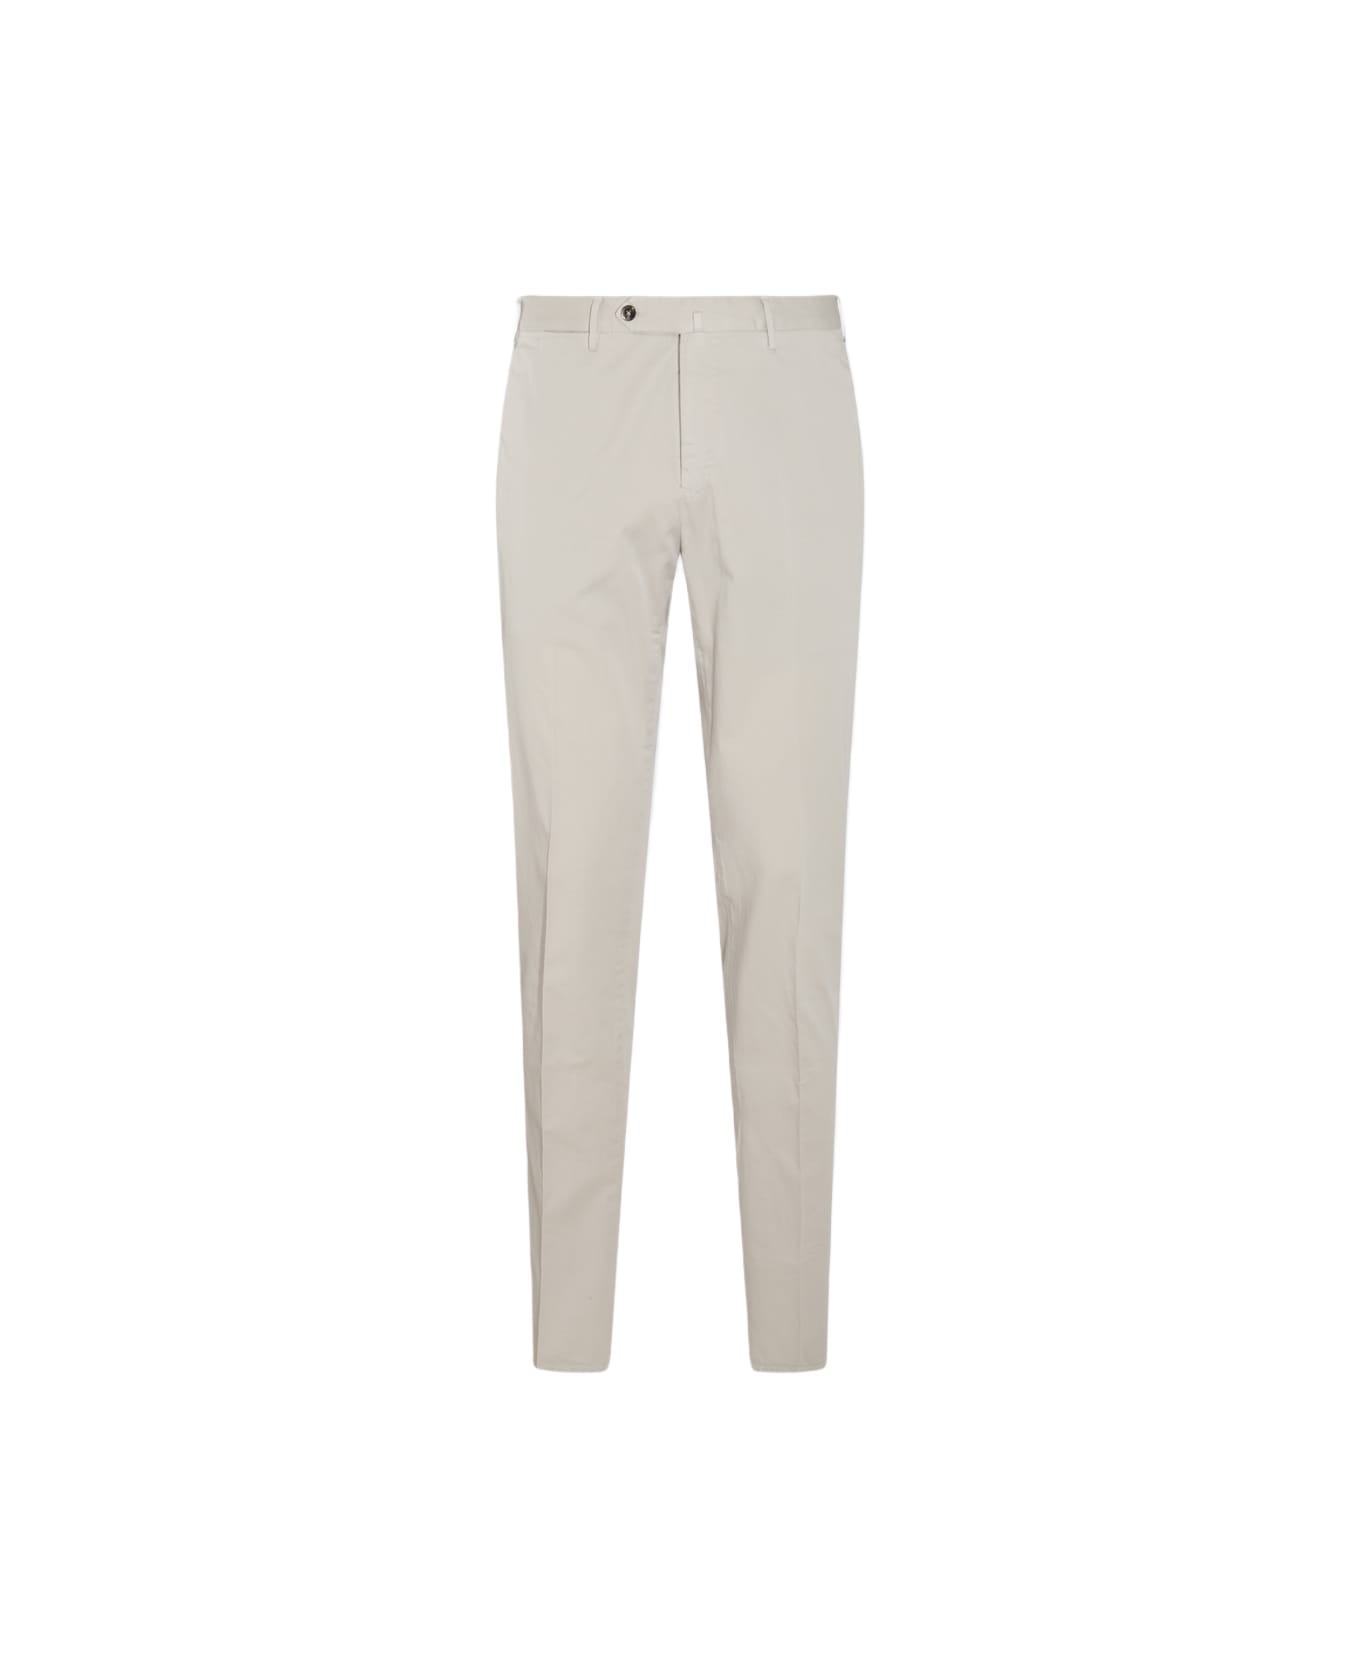 PT Torino Light Grey Cotton Pants - Light Grey